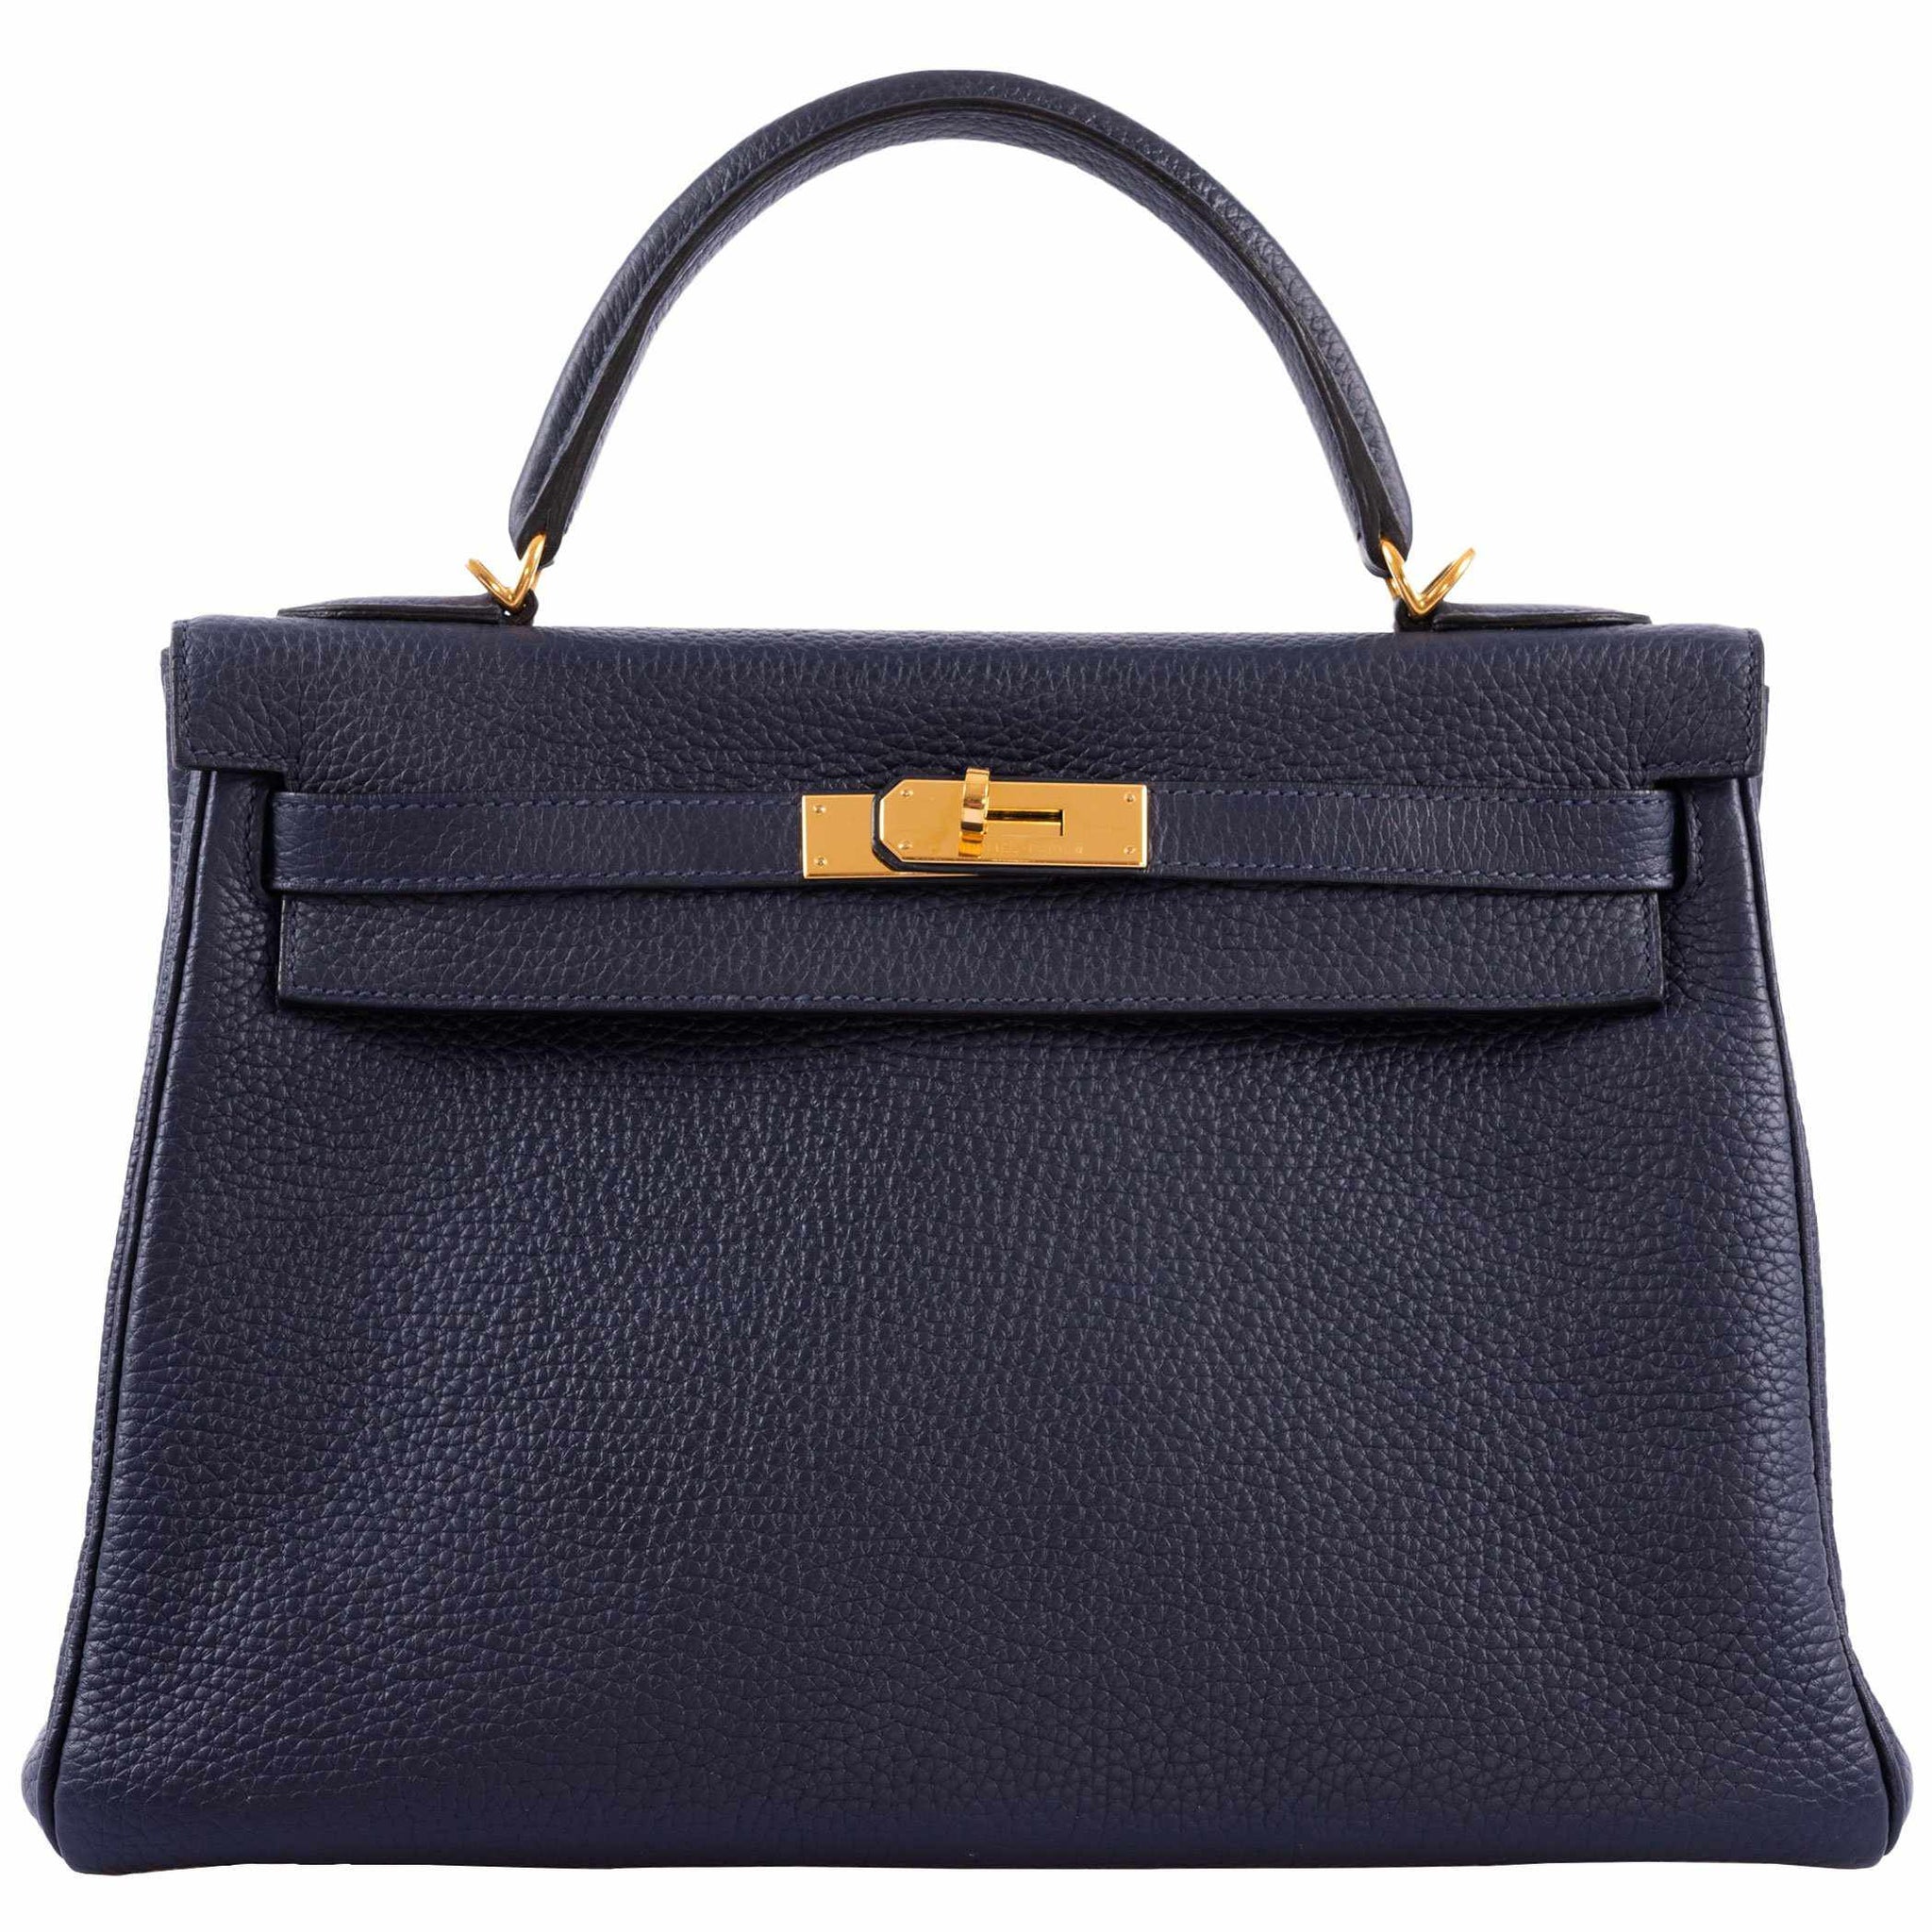 Hermes 35cm Malachite Togo Leather Kelly Bag GHW Auction